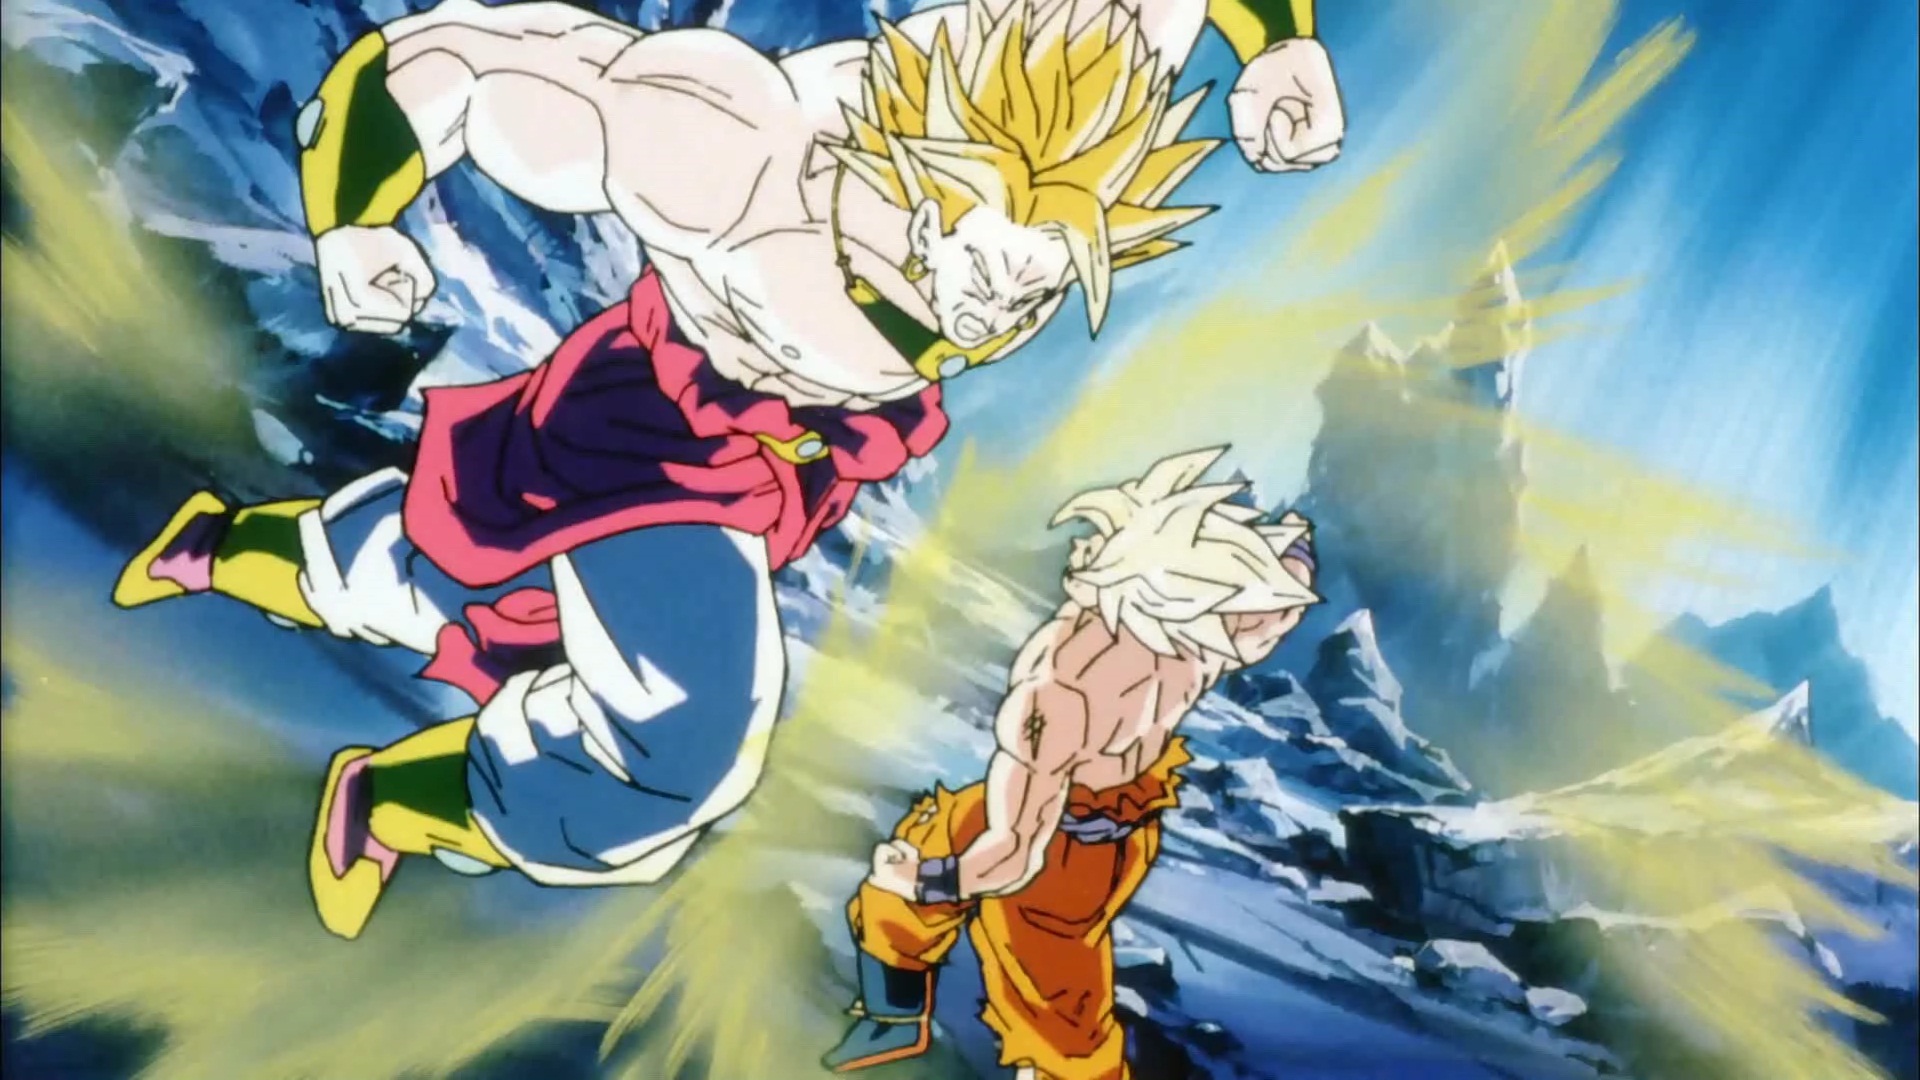 Goku vs broly wallpaper